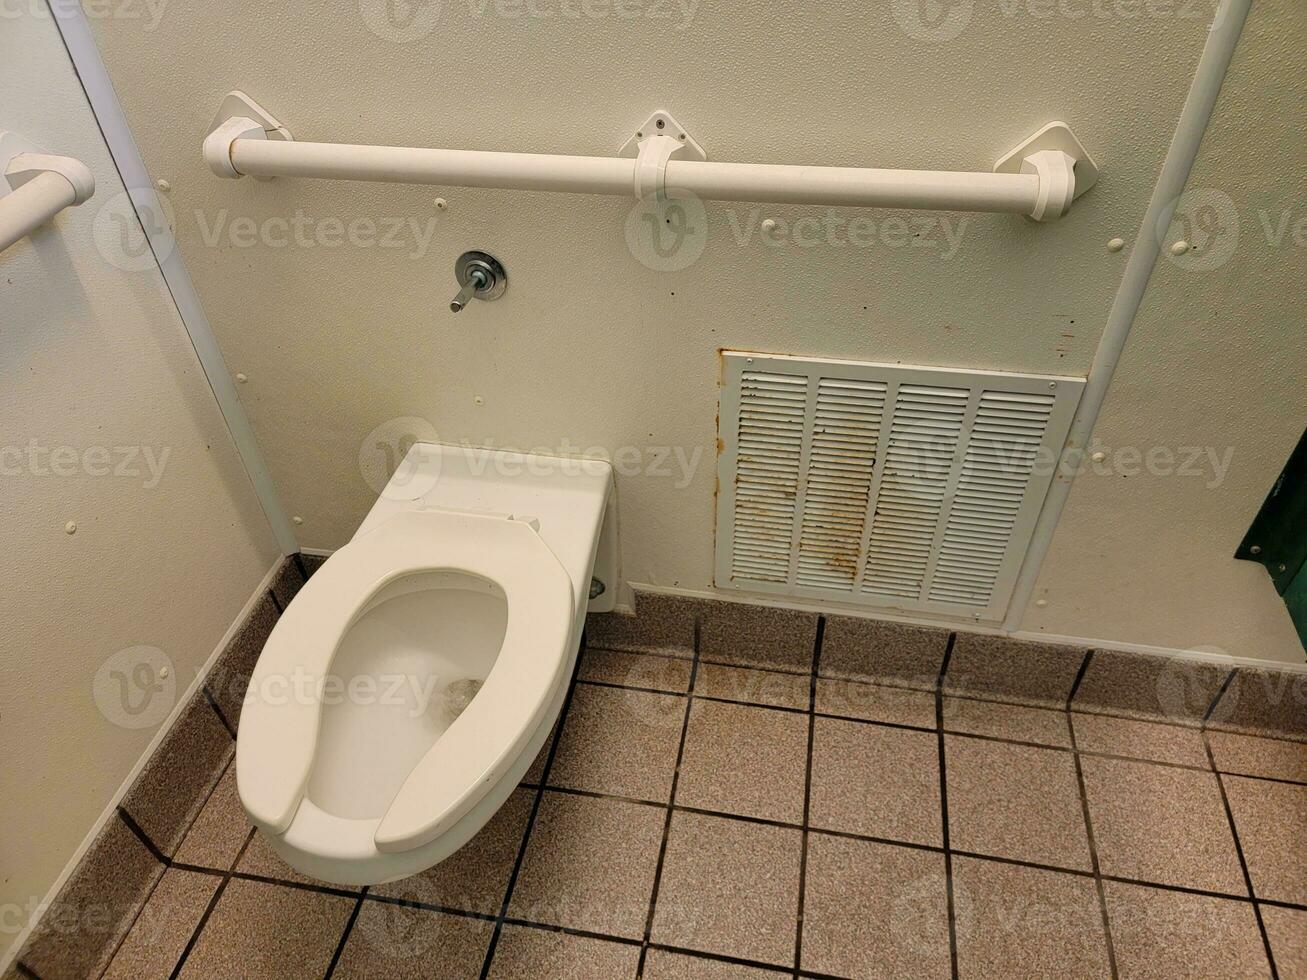 toilet en roestige verwarming in badkamer of toilethokje foto